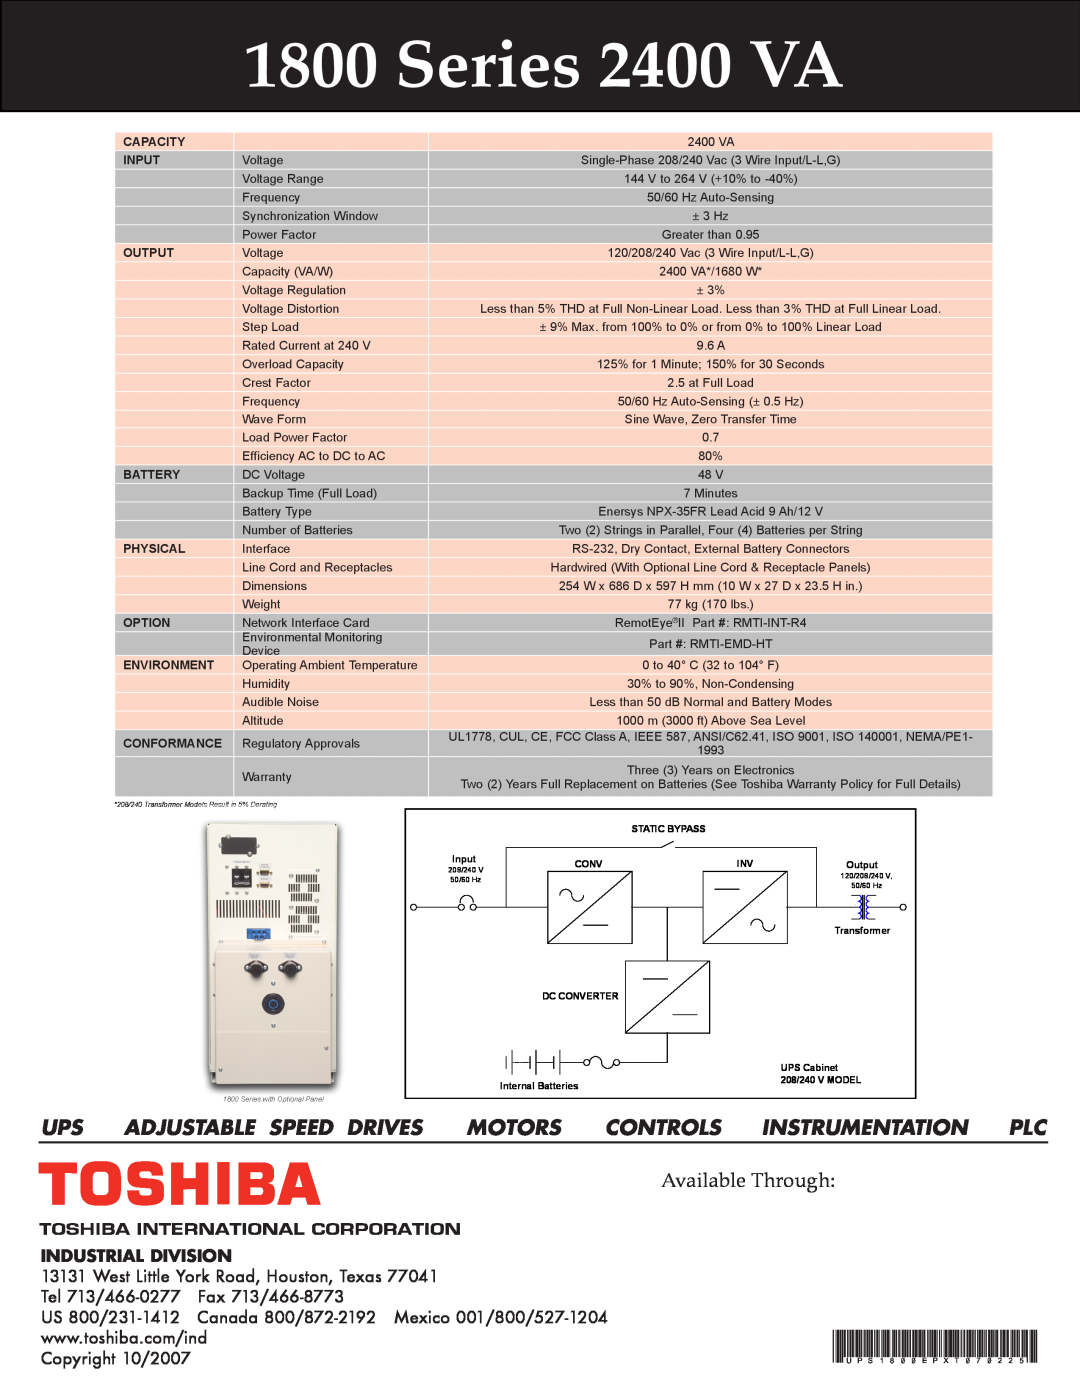 Toshiba 1800 SERIES Series 2400 VA, Adjustable Speed Drives, Motors, Controls, Instrumentation, Available Through, Input 